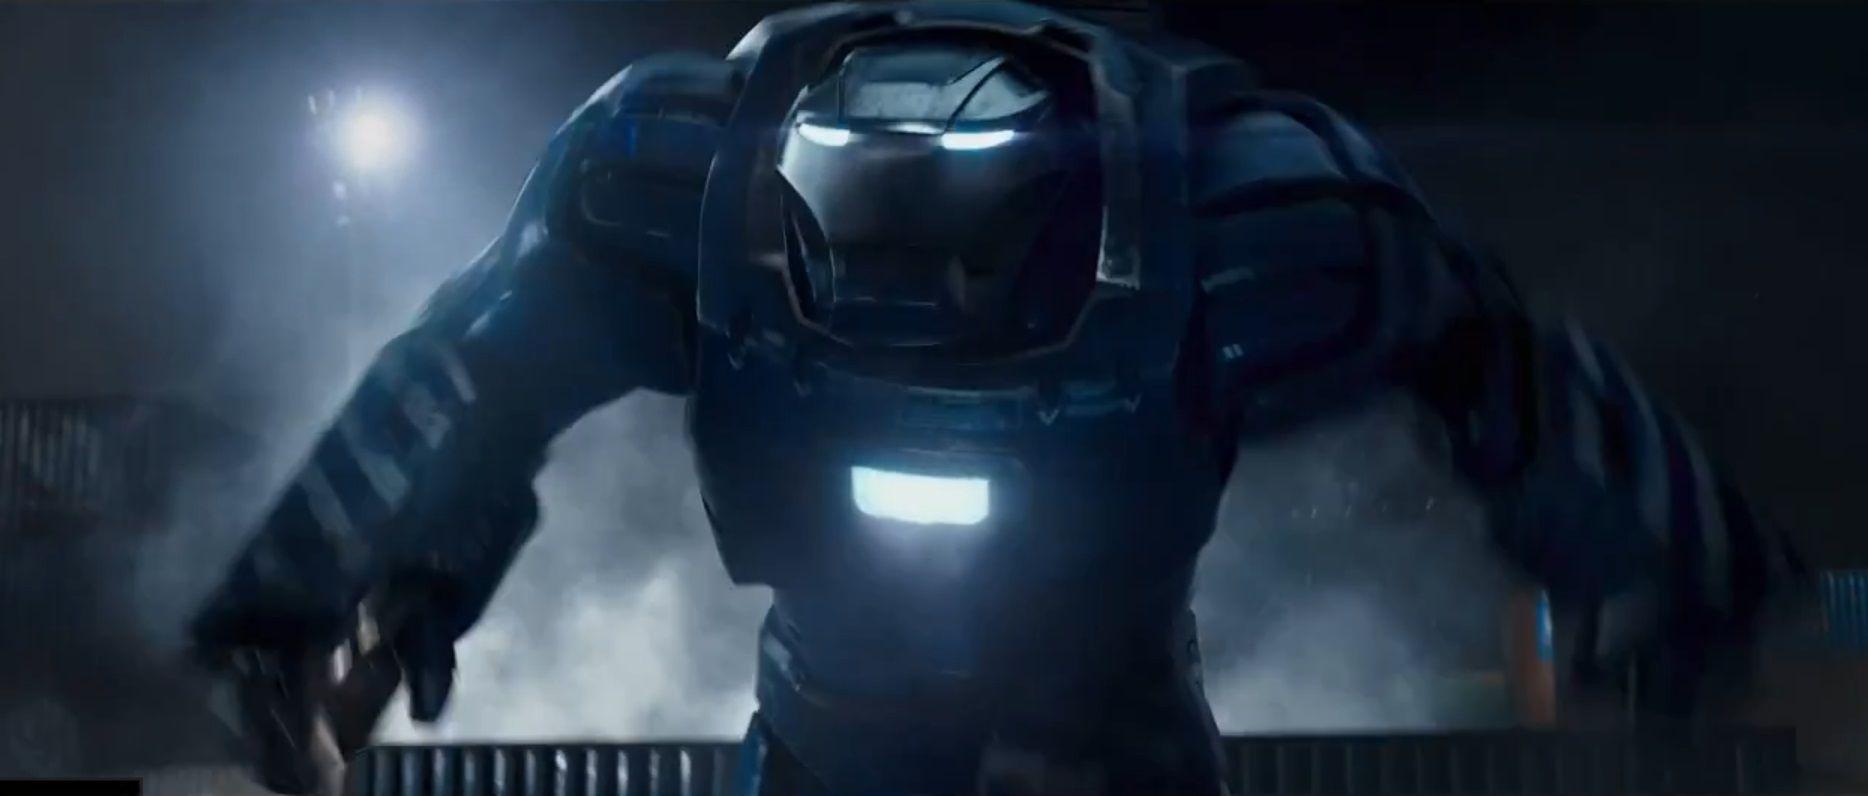 Iron Man 3 Armor (id: 31028)